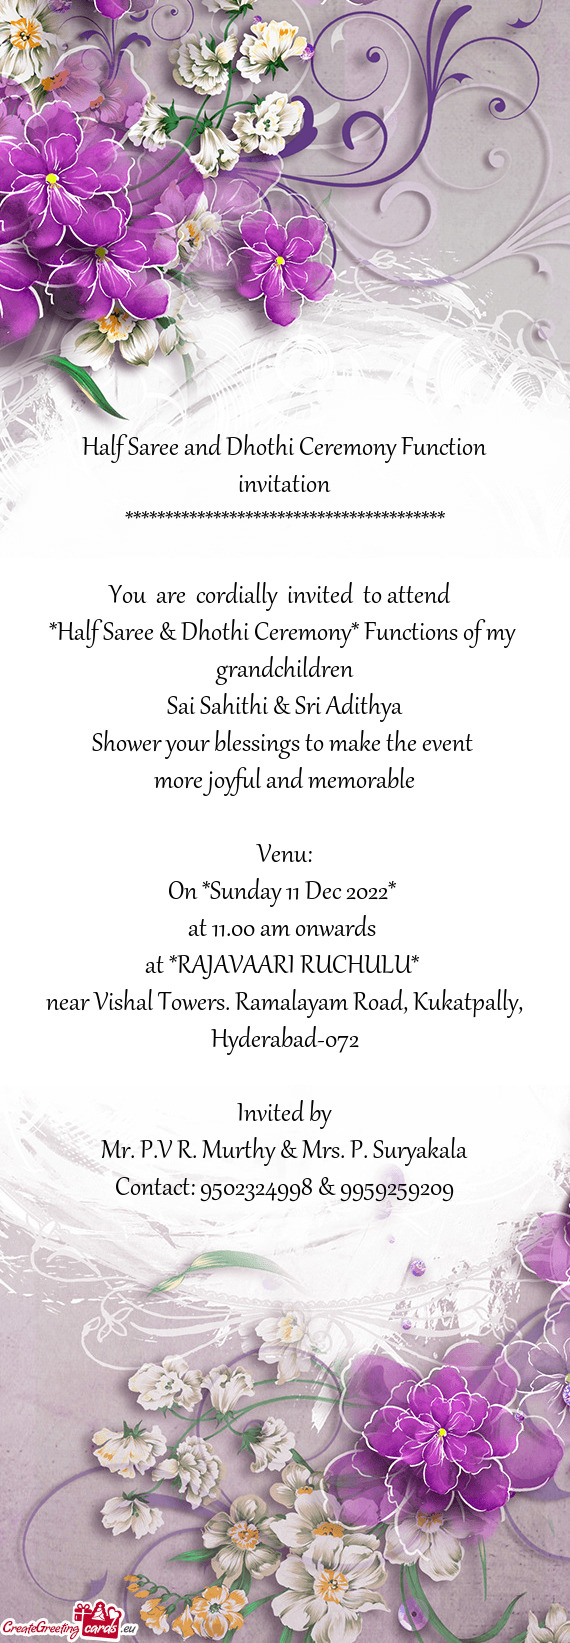 Half Saree and Dhothi Ceremony Function invitation